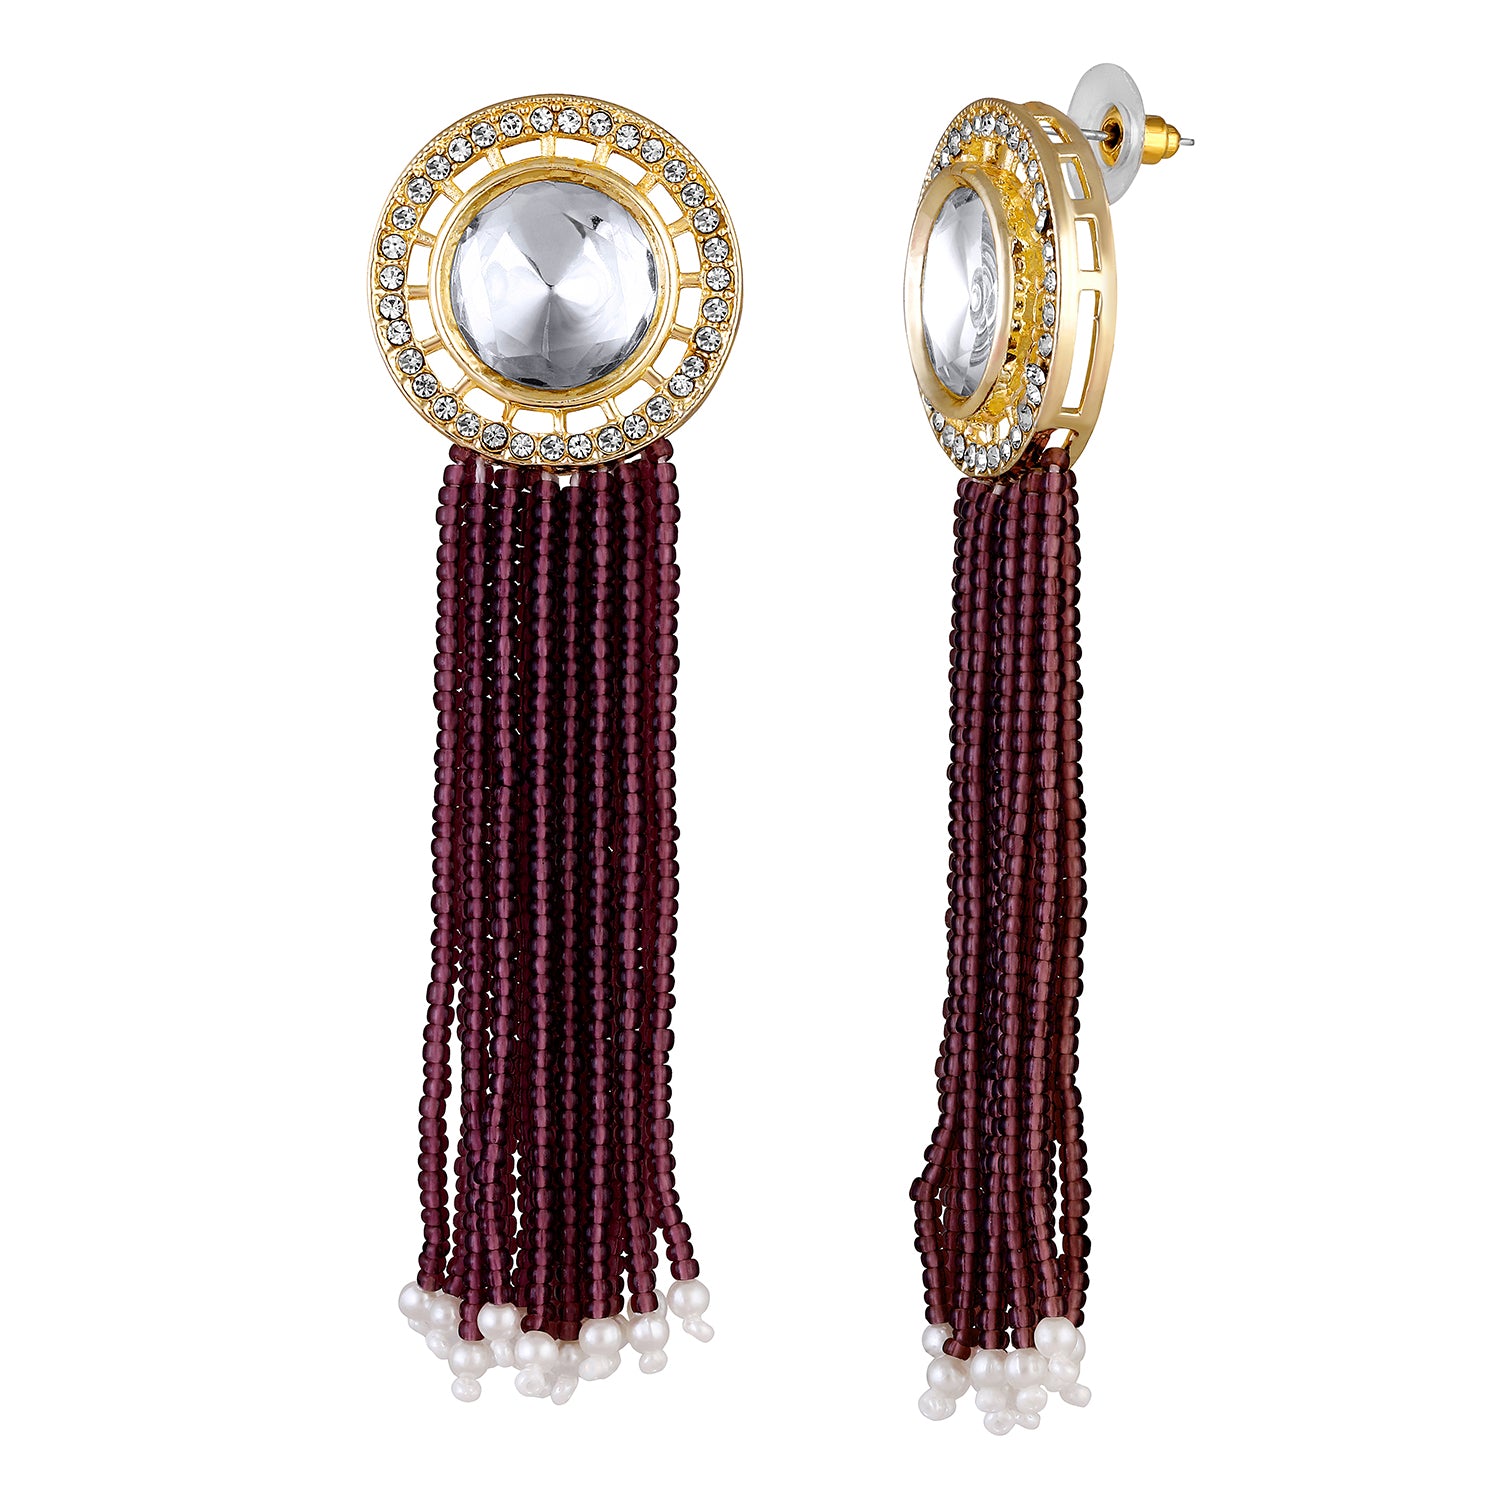 Maharani Layered Necklace Set